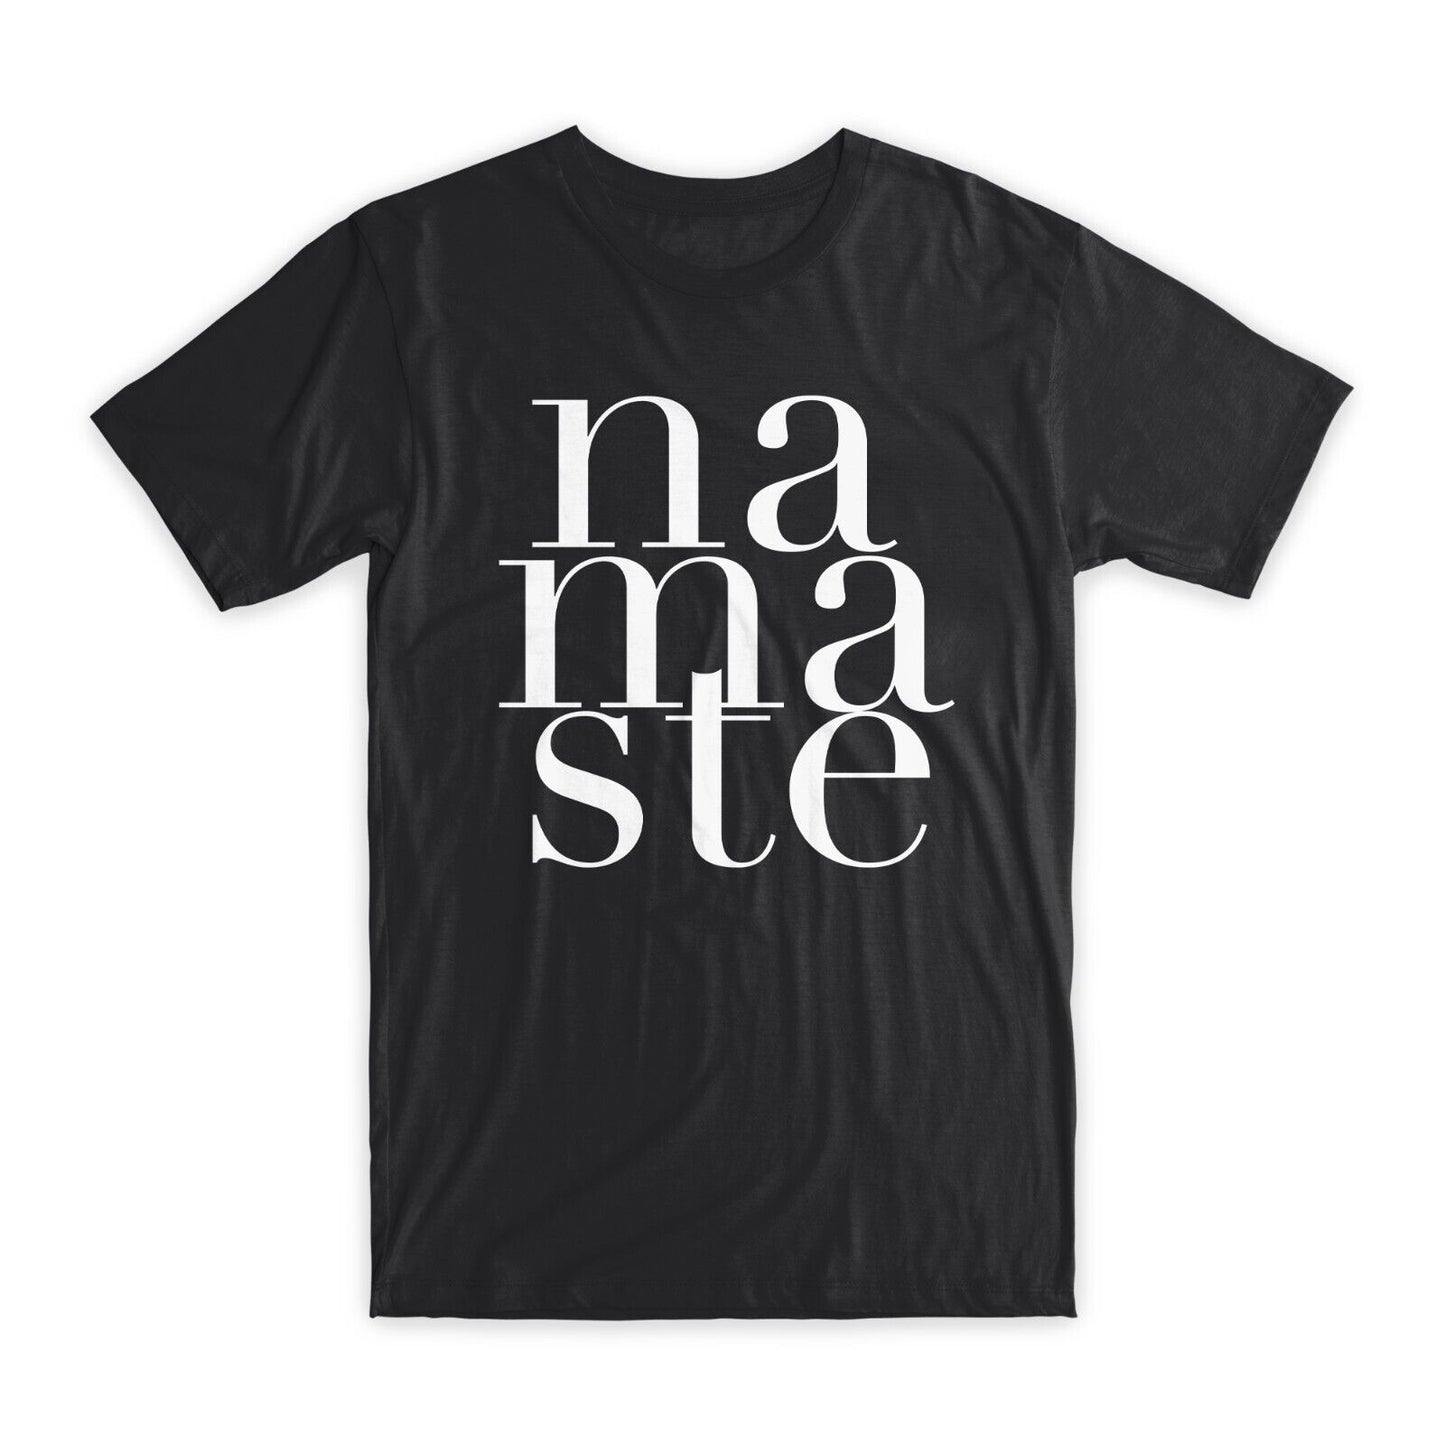 Namaste Printed T-Shirt Premium Soft Cotton Crew Neck Funny Tee Novelty Gift NEW